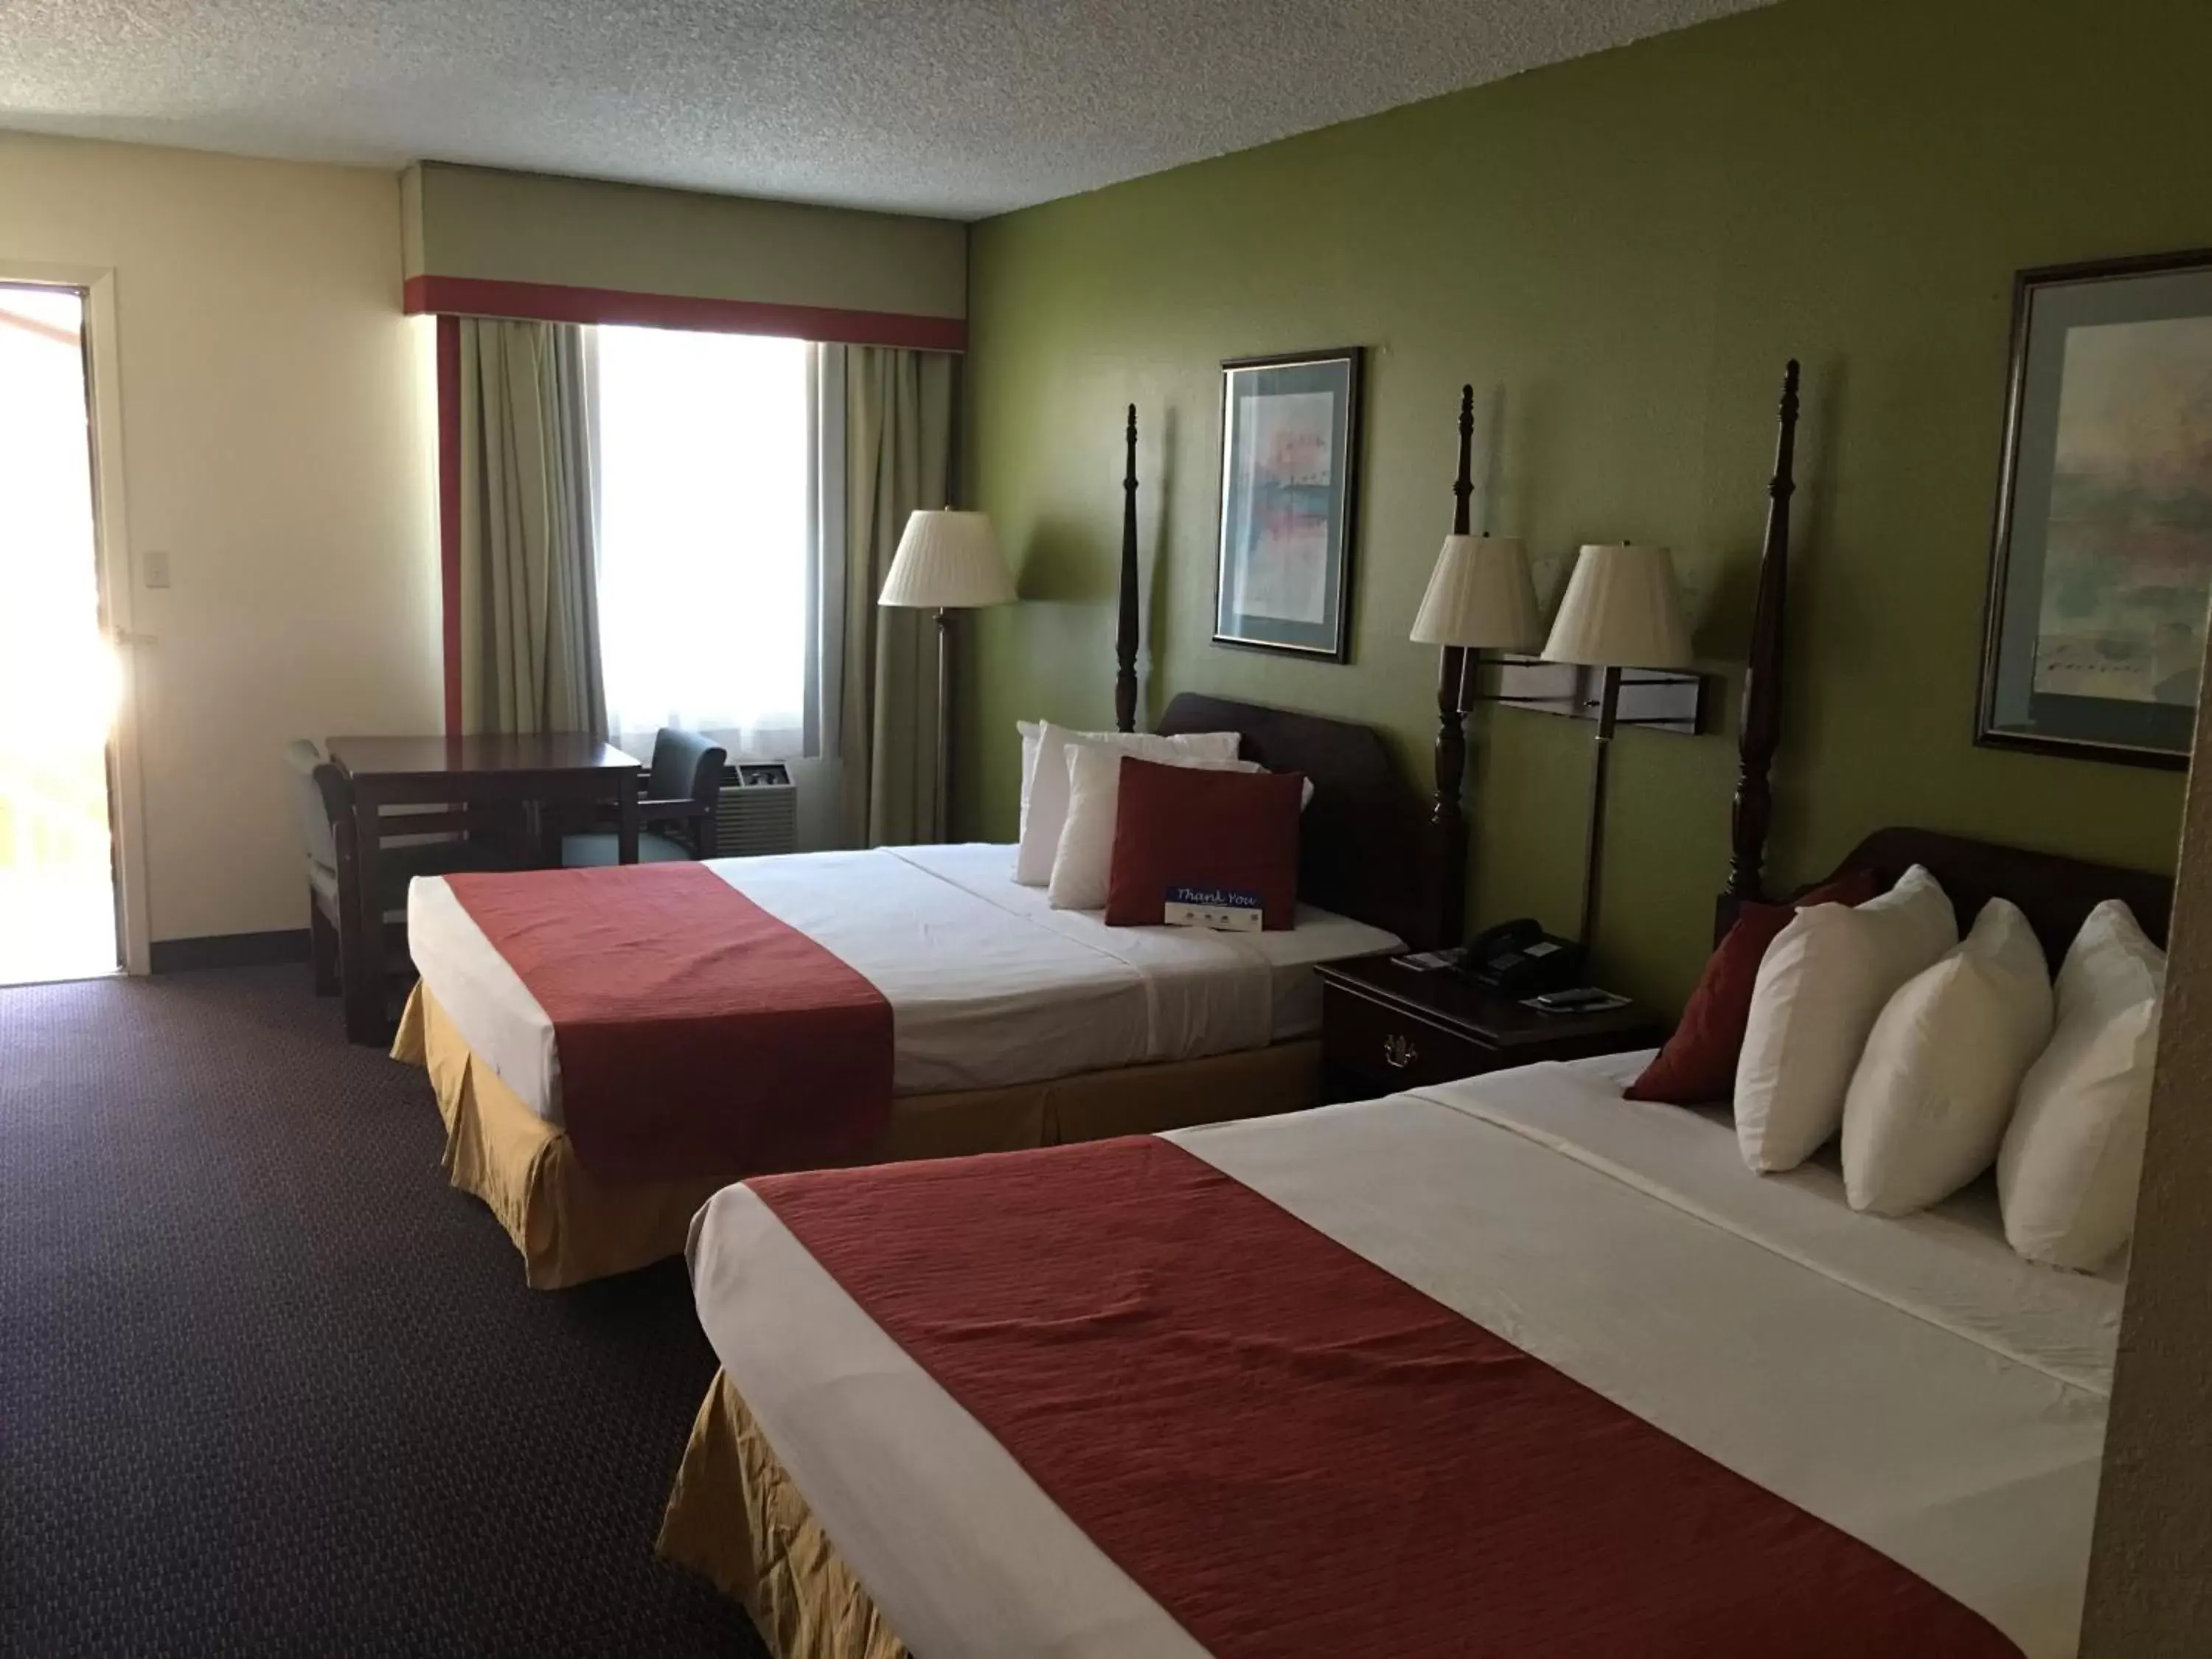 Bedroom, Room Photo in Americas Best Value Inn - Malvern